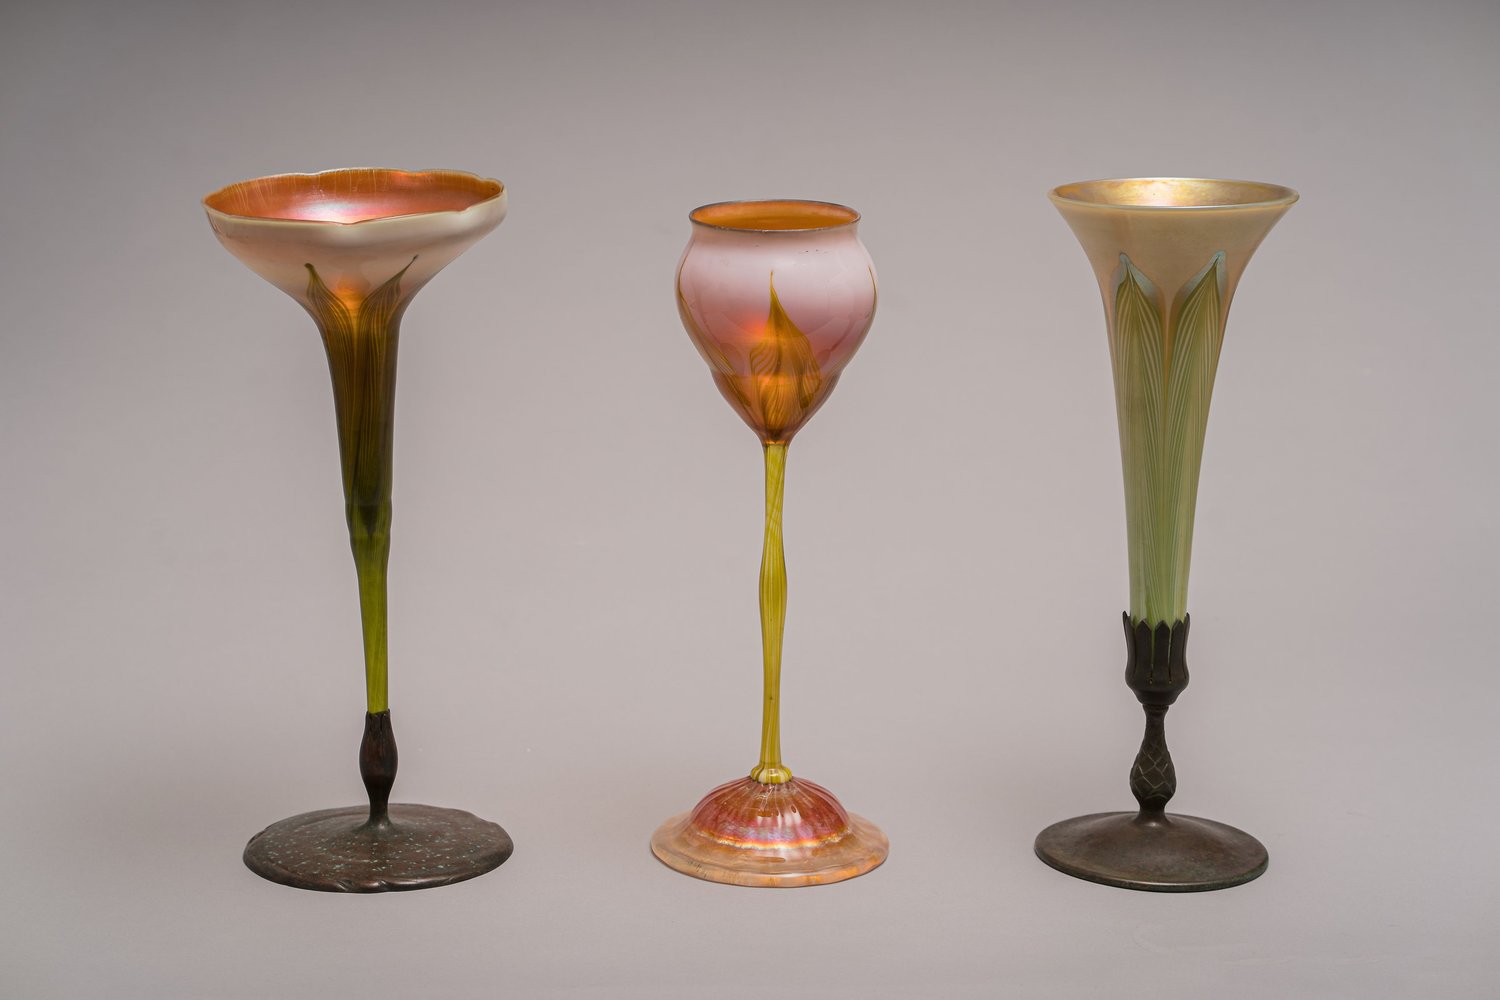 Tiffany Studios, “Floriform Vases,” 1900-1910, Lightner Museum Collection